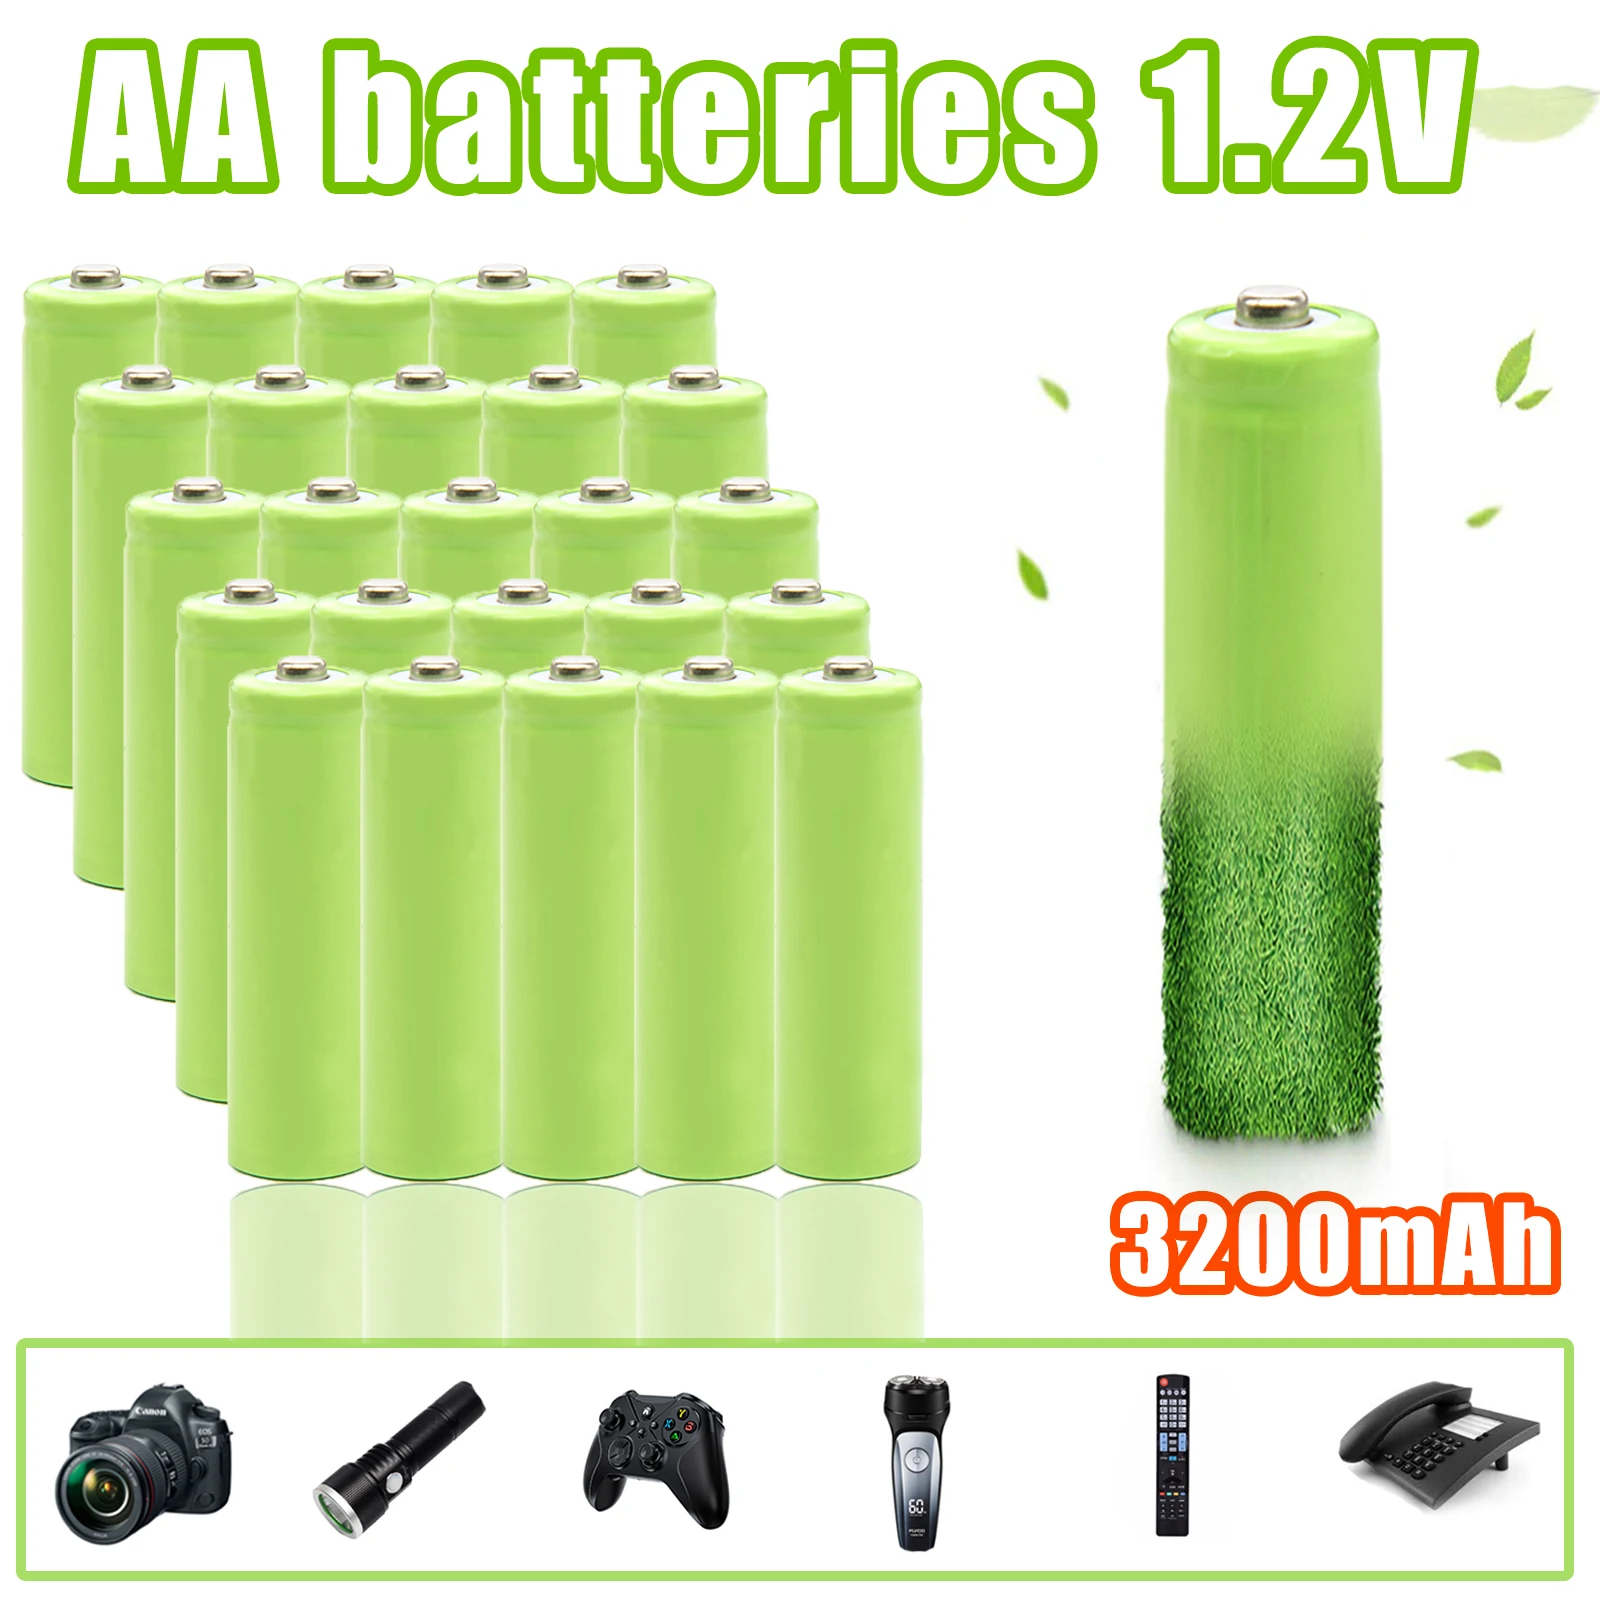 

Bonadget High Performance Battery 3200mAh AA long-lasting NI- MH 1.2 volt AA batteries,Game Controllers/remote controls Battery